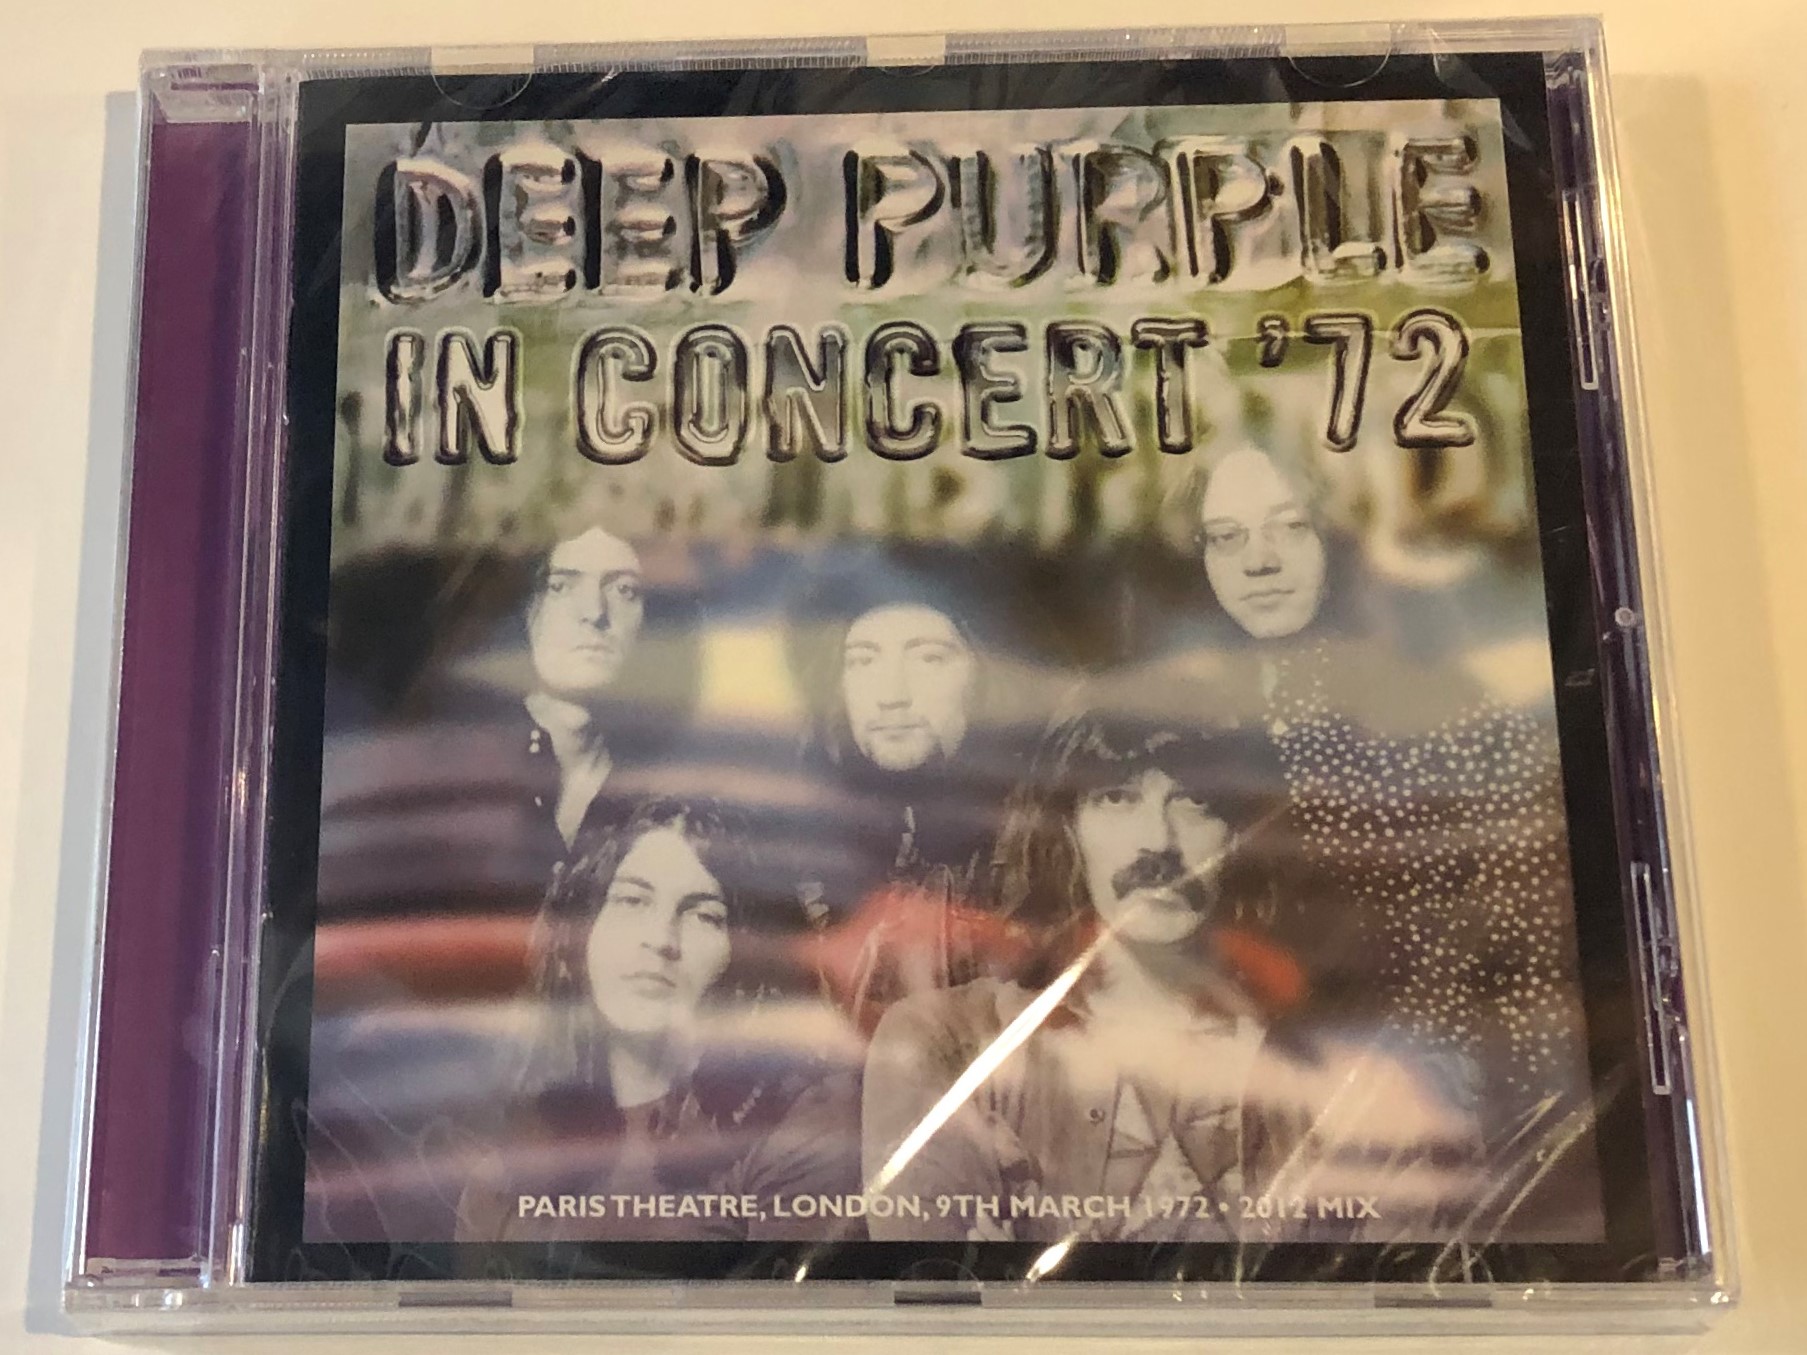 deep-purple-in-concert-72-paris-theatre-london-9th-march-1972-2012-mix-parlophone-audio-cd-2012-825646294794-1-.jpg